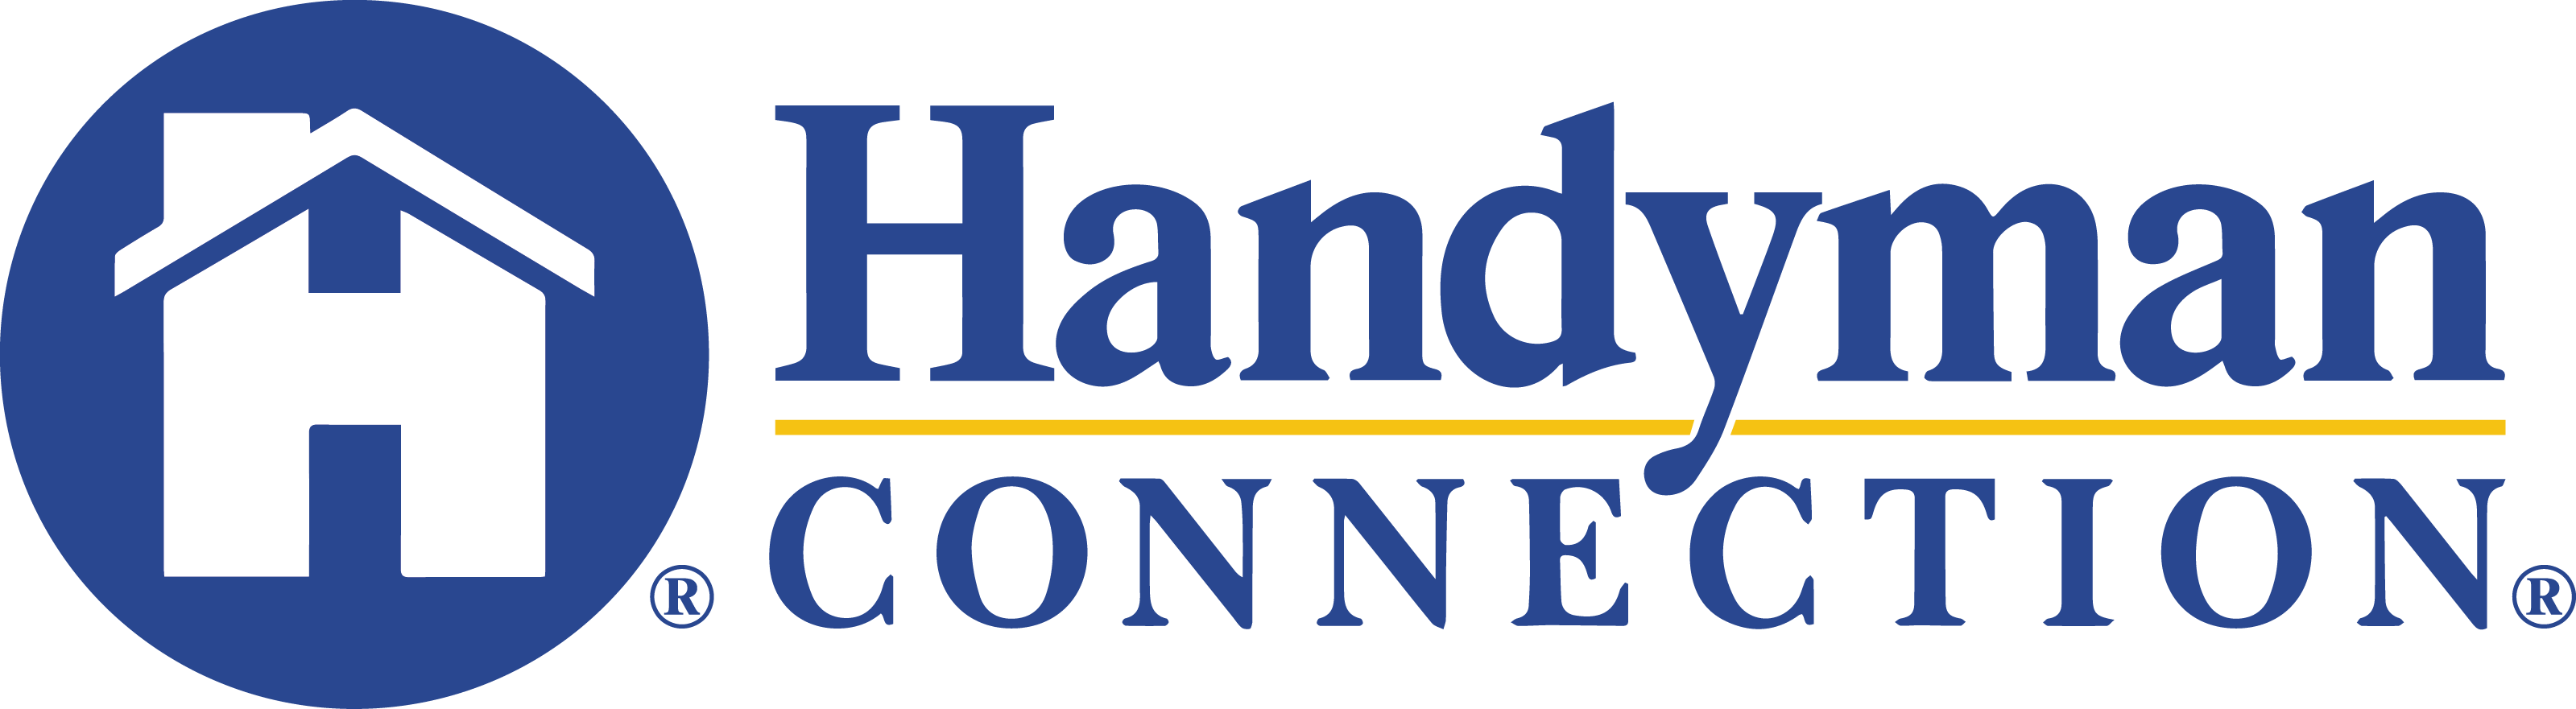 https://handymanconnection.com/wp-content/uploads/2021/05/HandymanConnection-logo-2-1.png